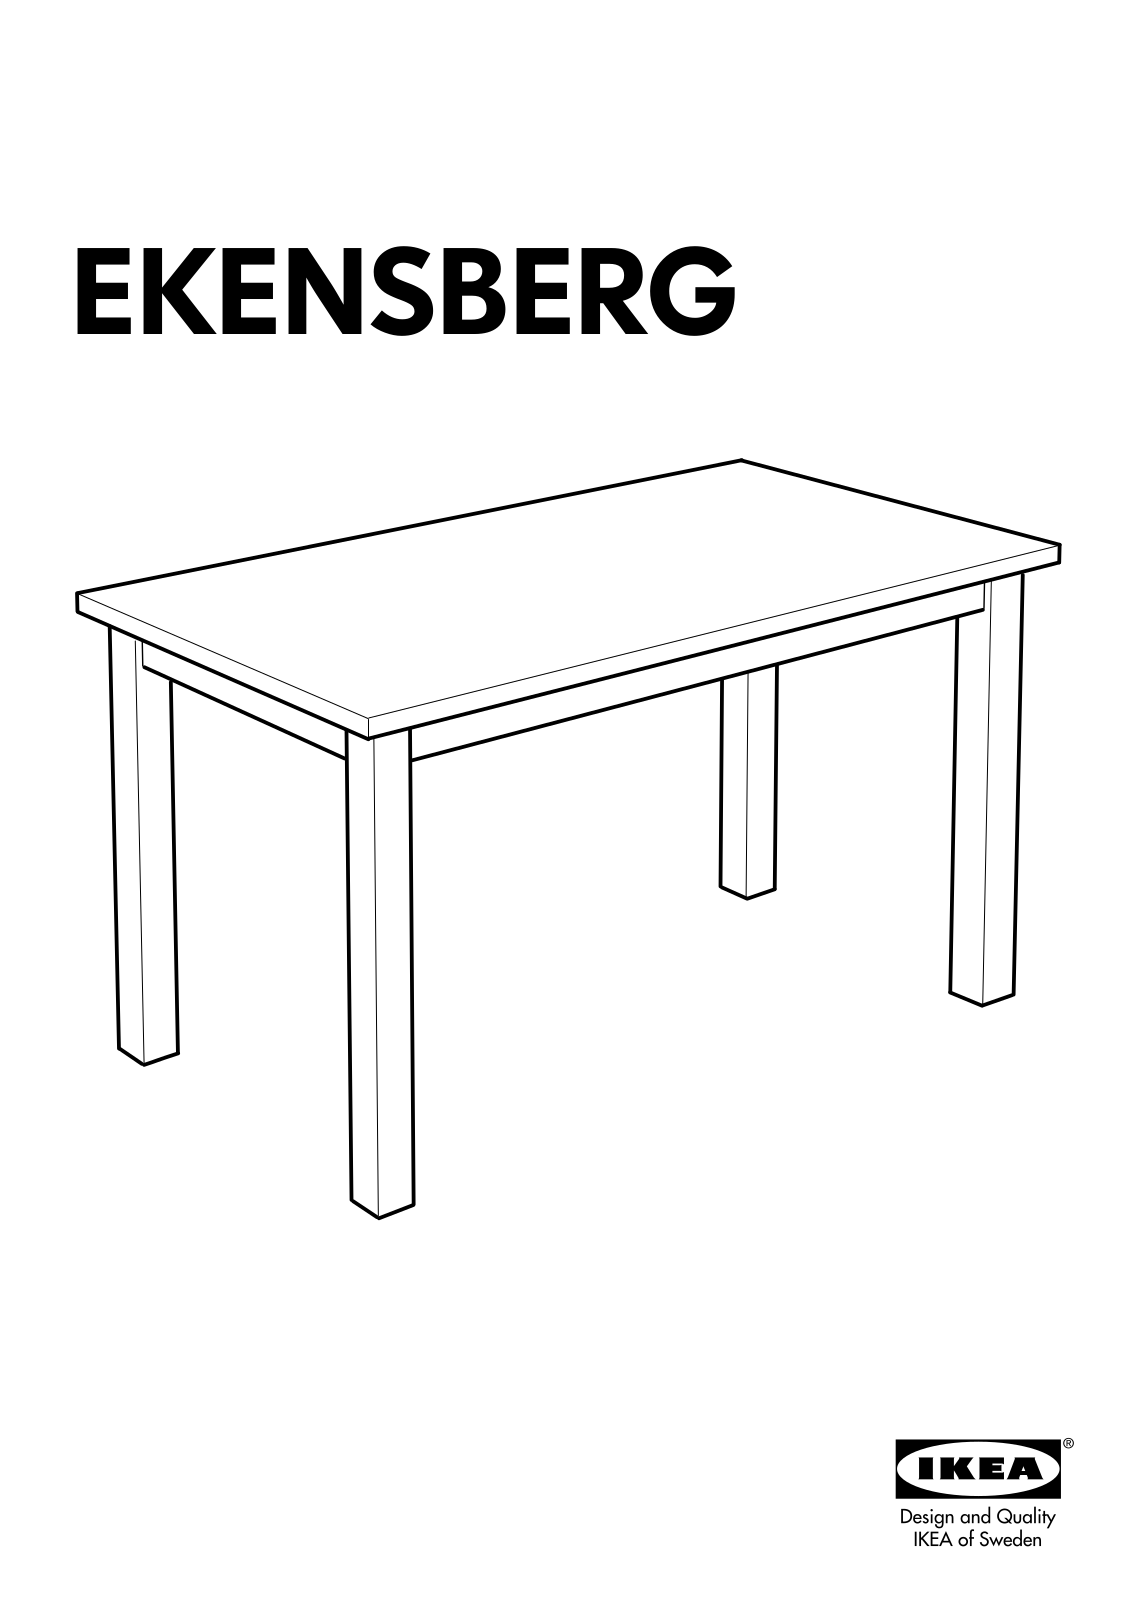 IKEA EKENSBERG User Manual